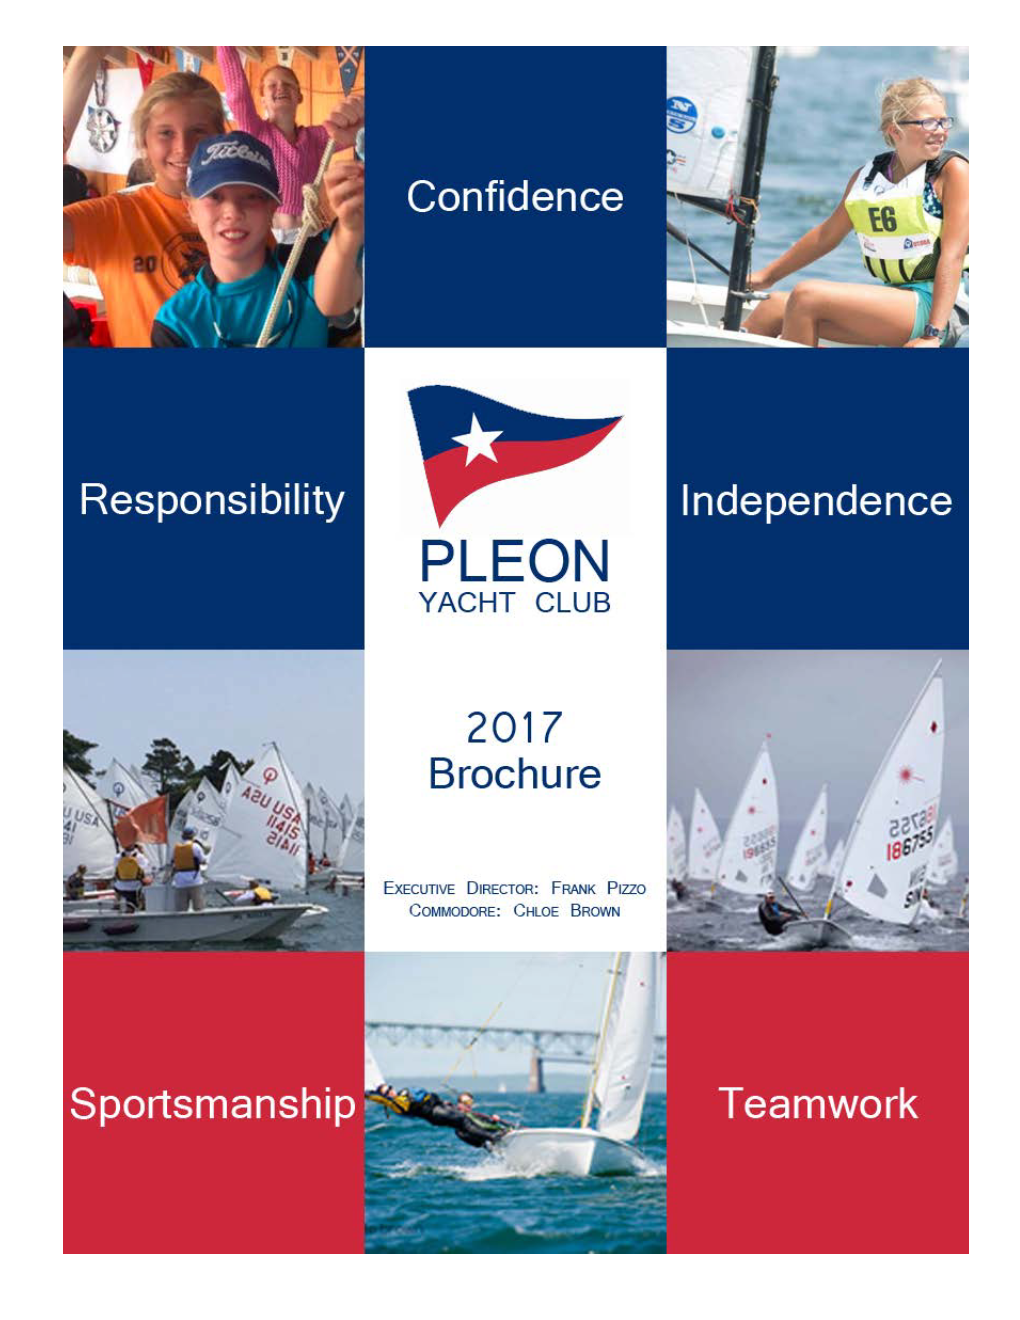 Pleon Yacht Club and the 2008 Sailing Program